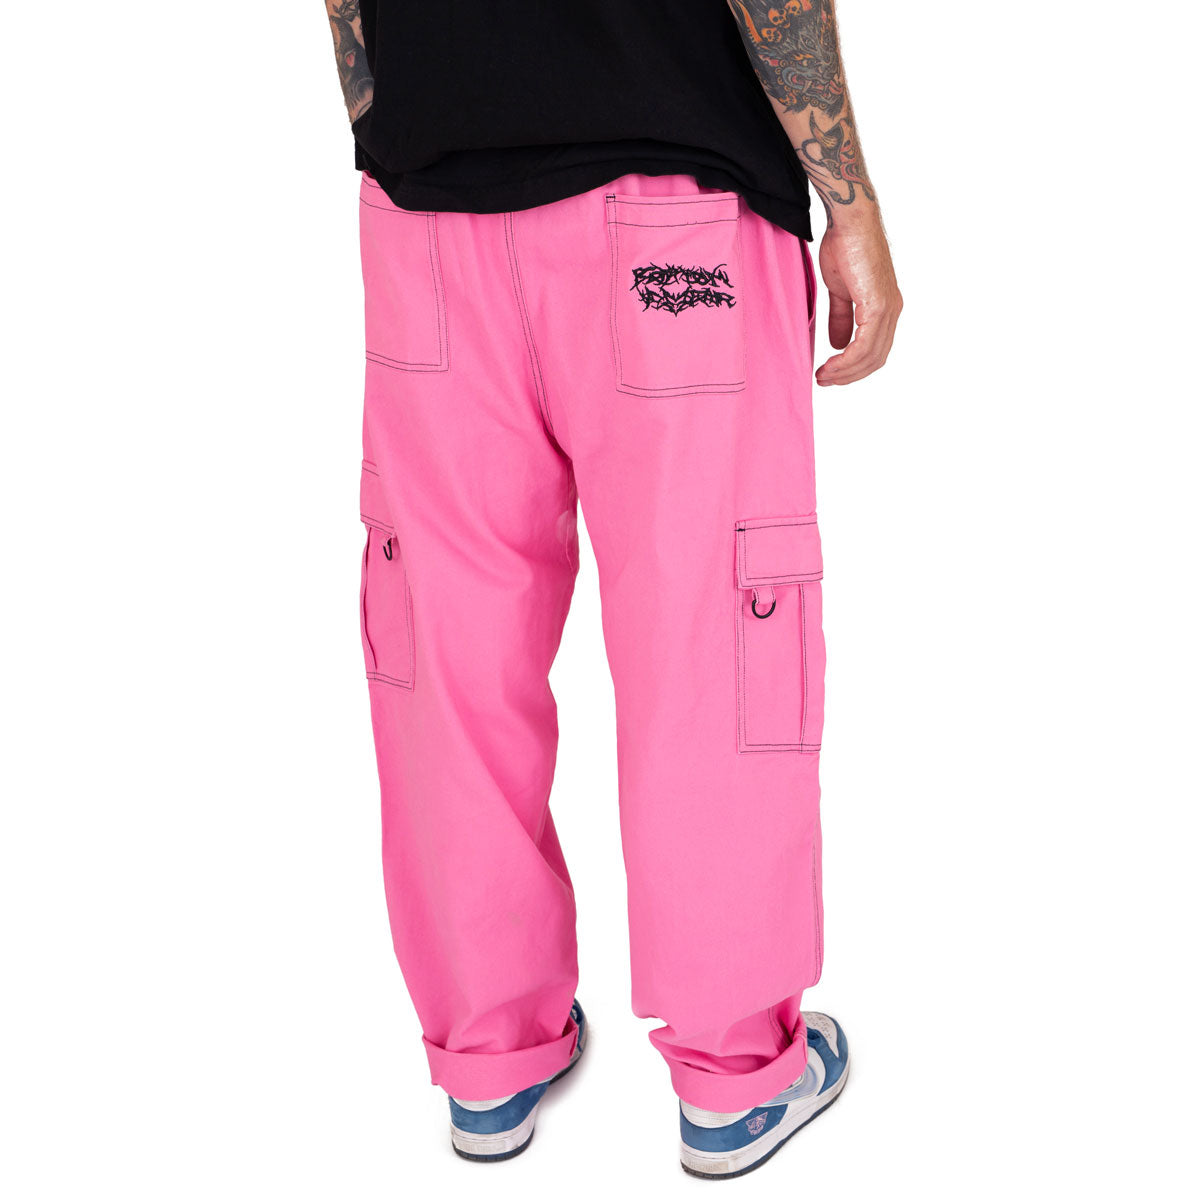 CCS Titus Twill Cargo Pants - Pink/Black image 3